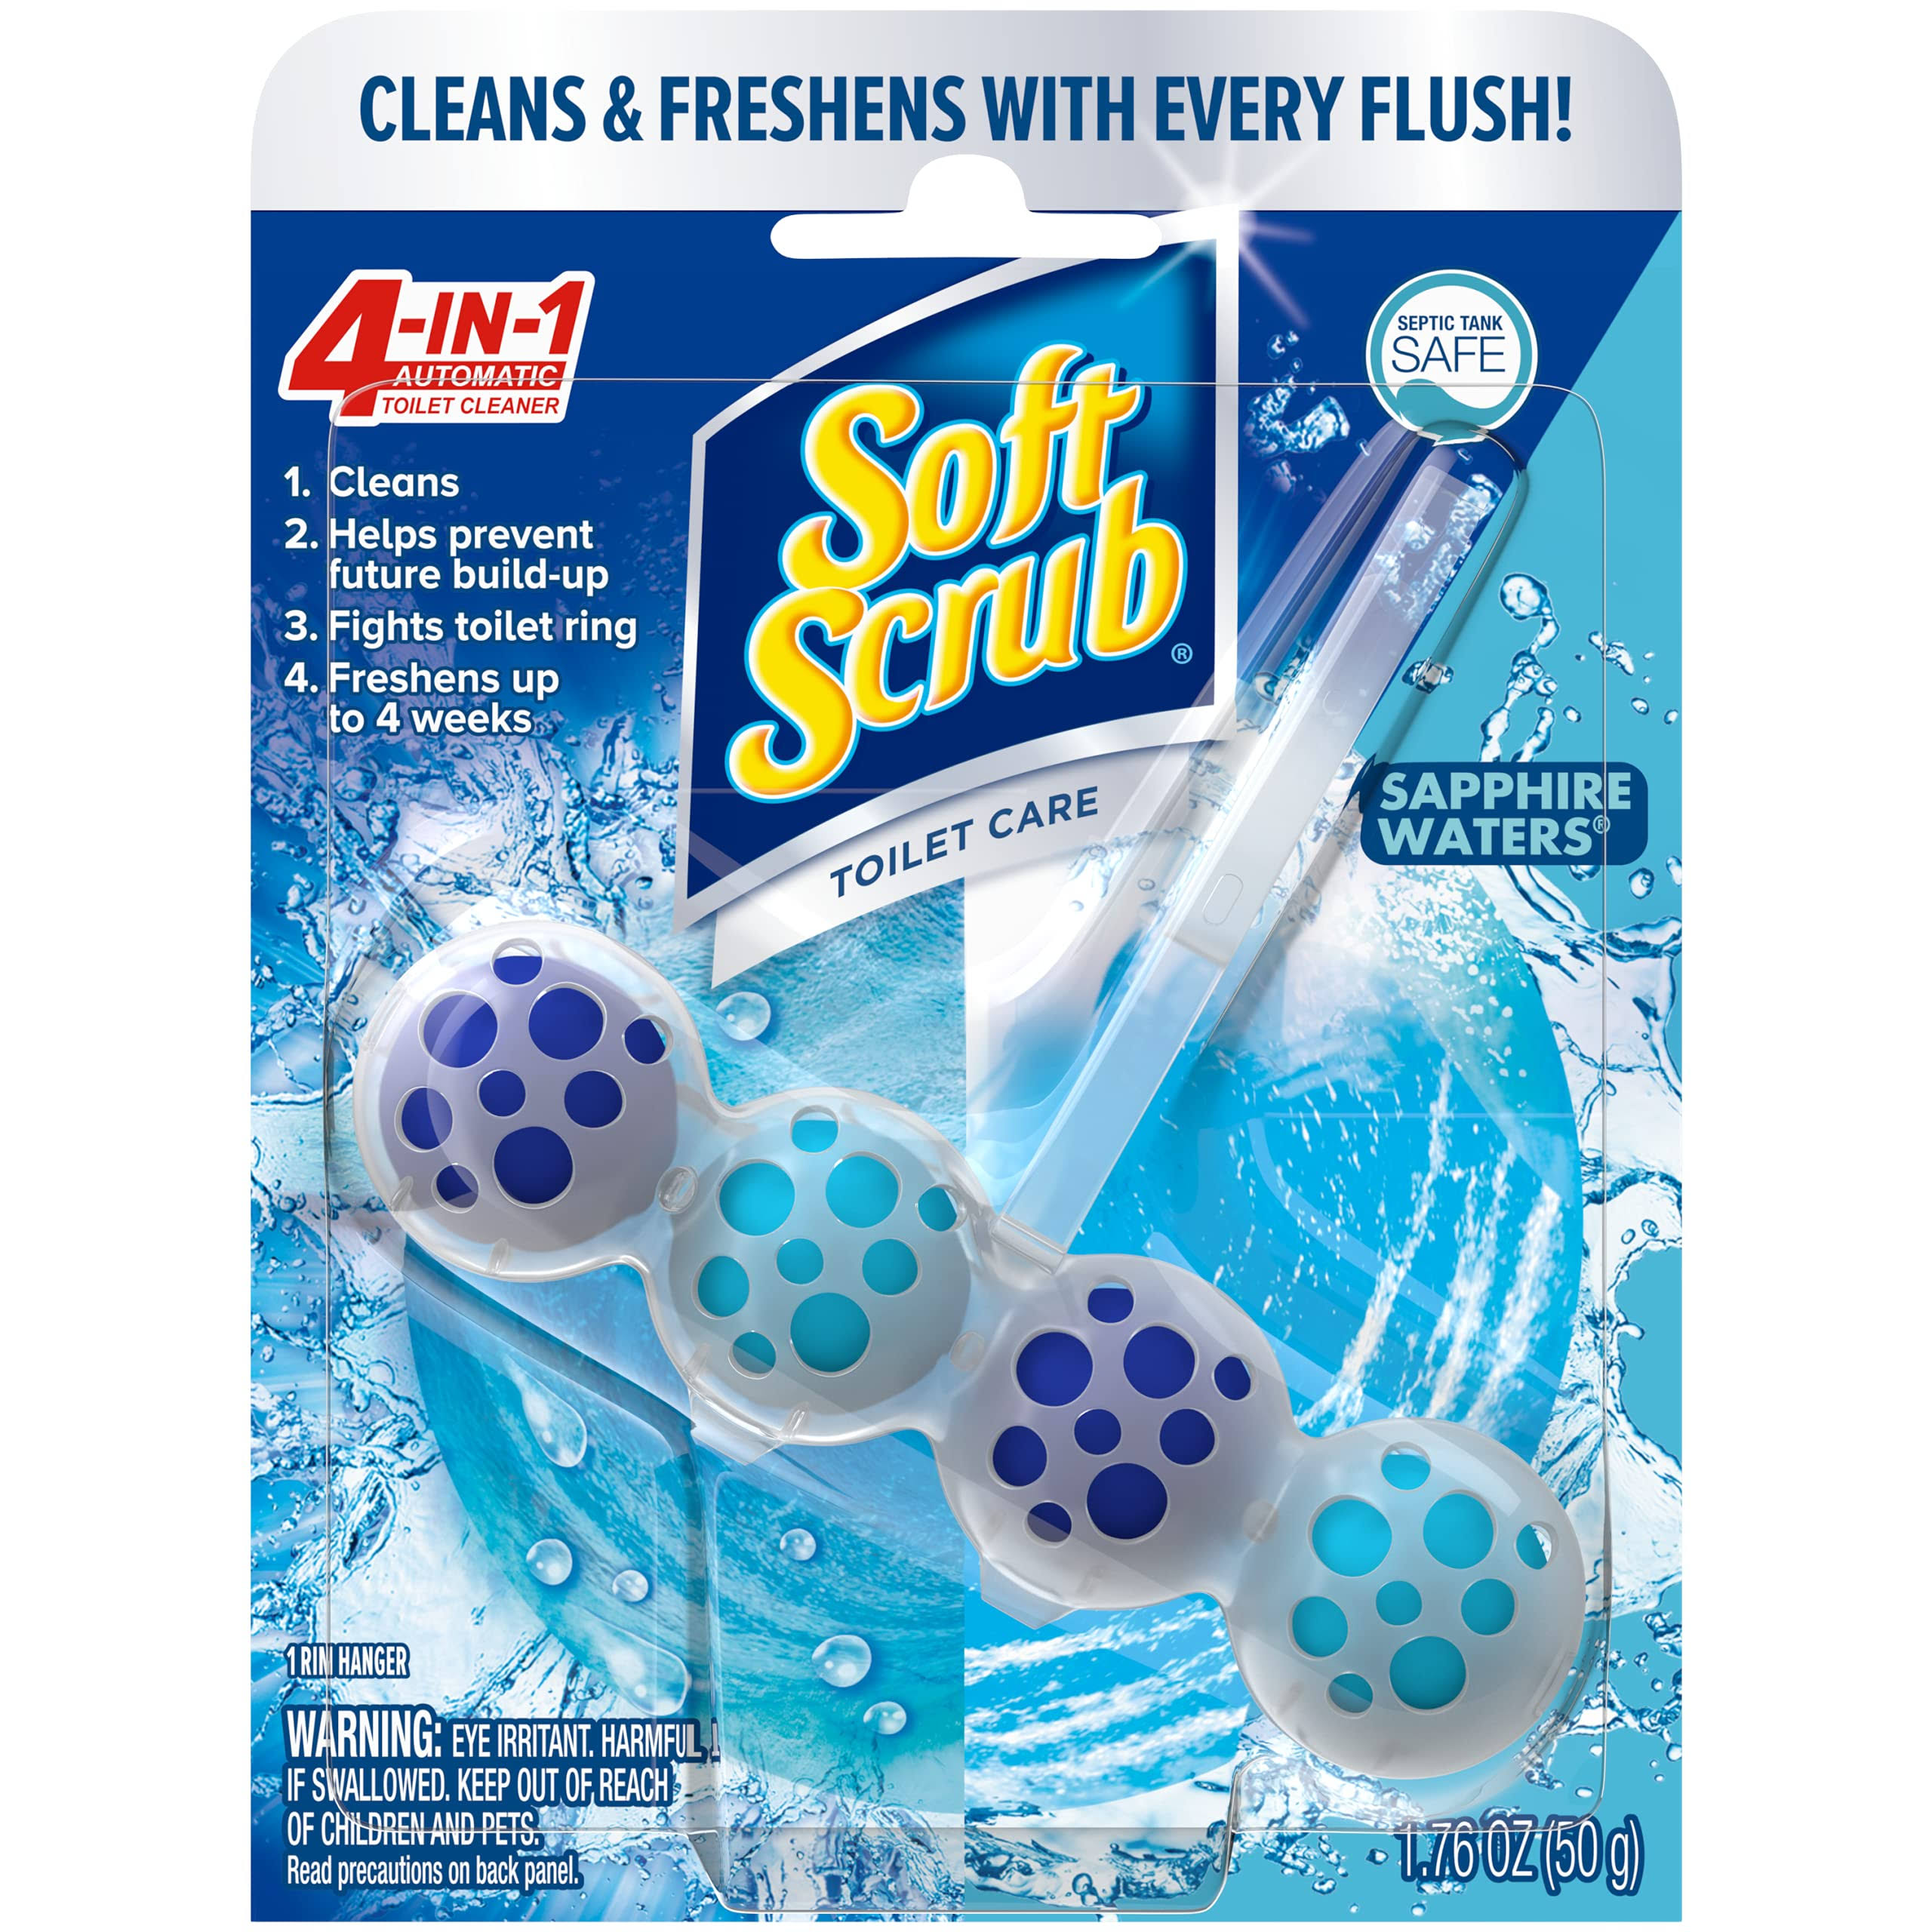 Soft Scrub 4-in-1 Toilet Care - Sapphire Waters, 1.76oz